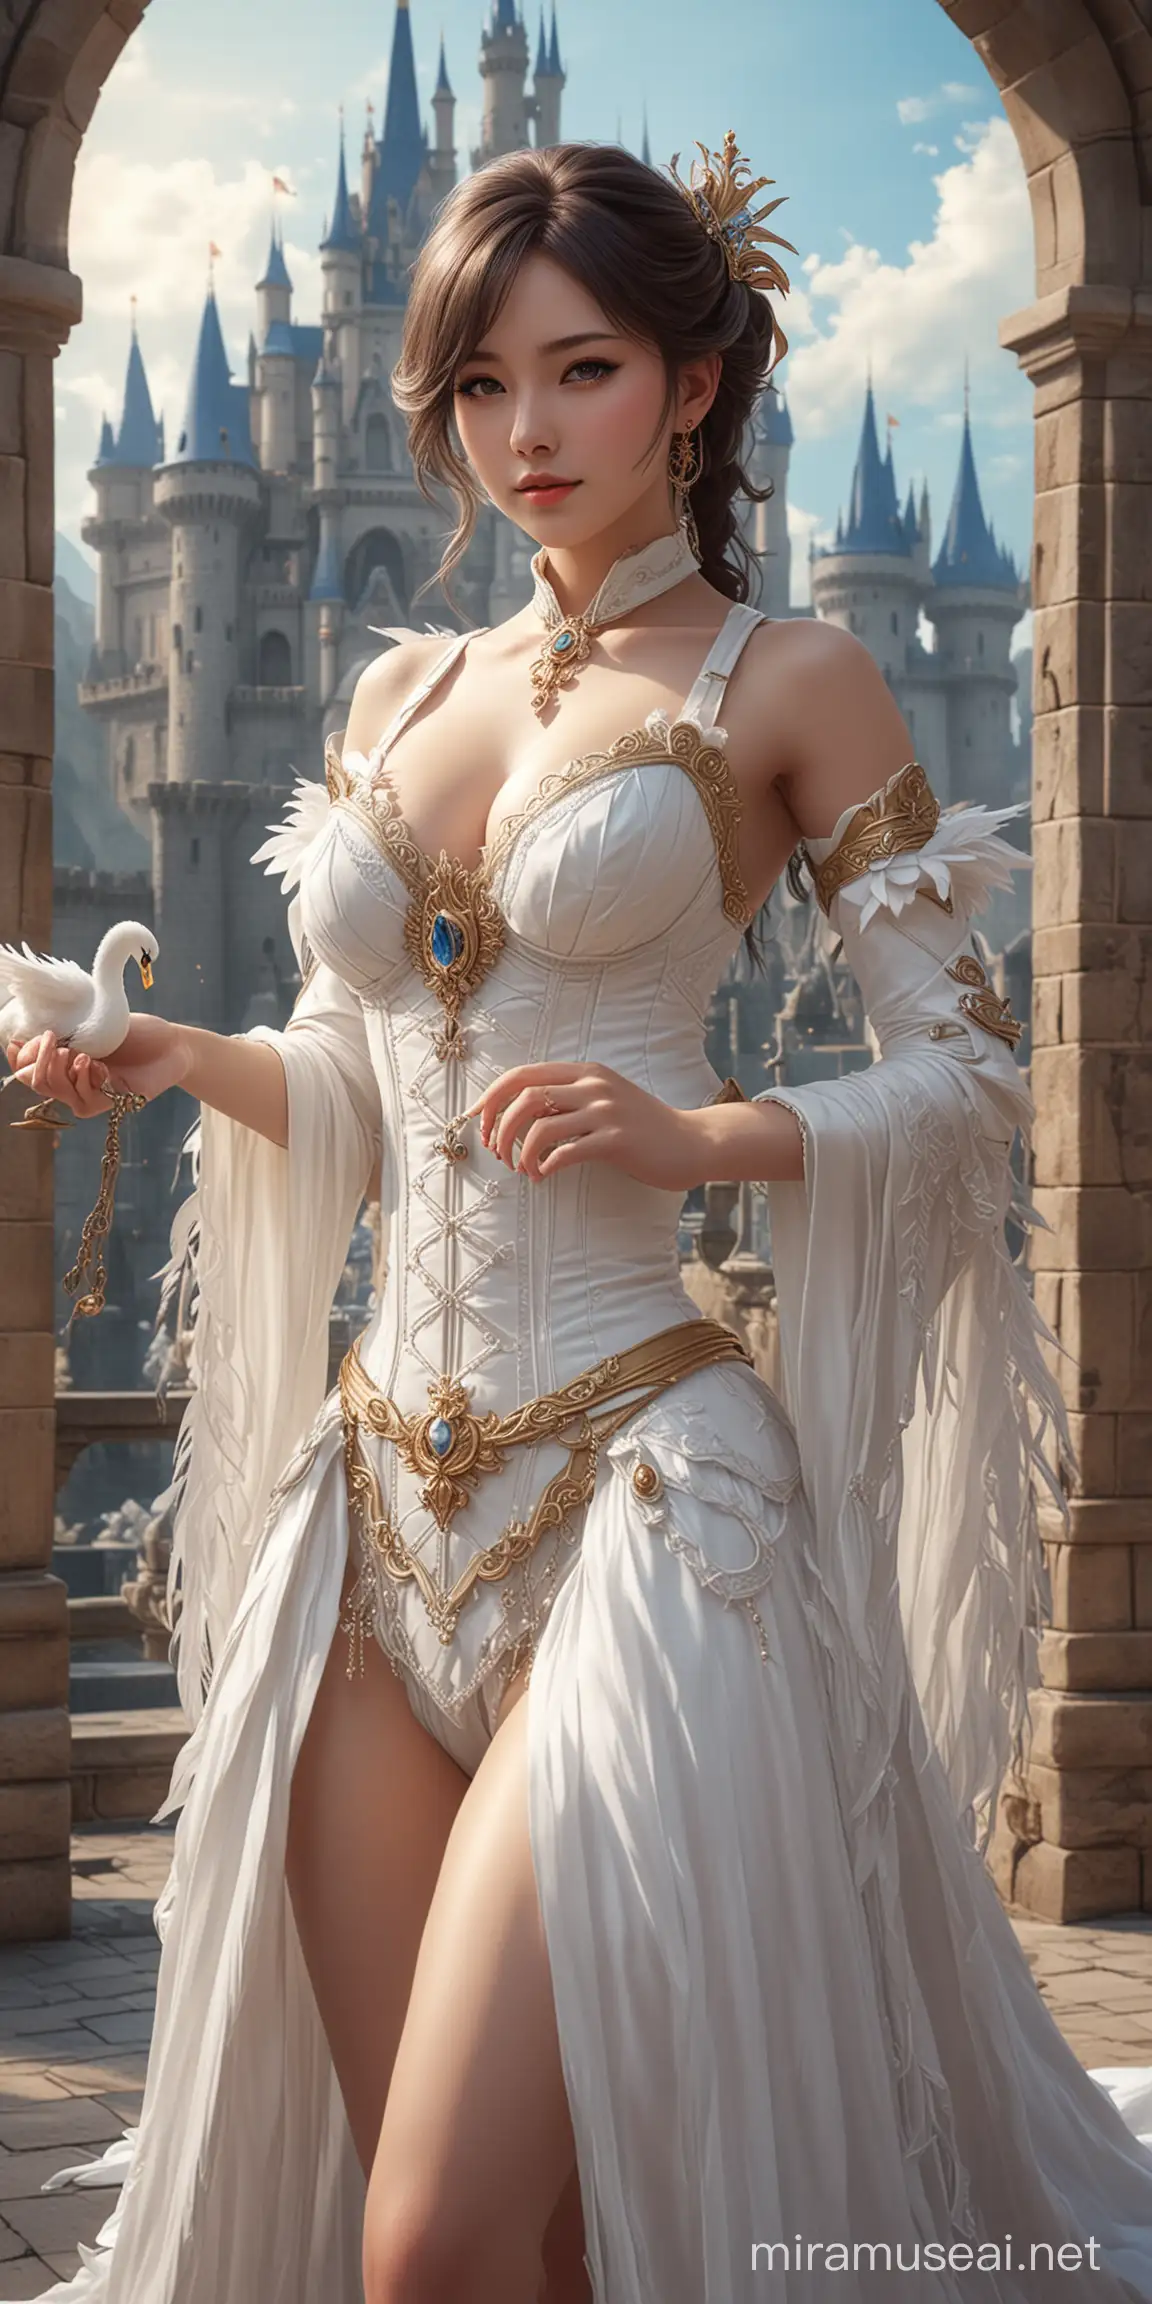 Elegant Swan Alchemist in Fantasy Castle Setting